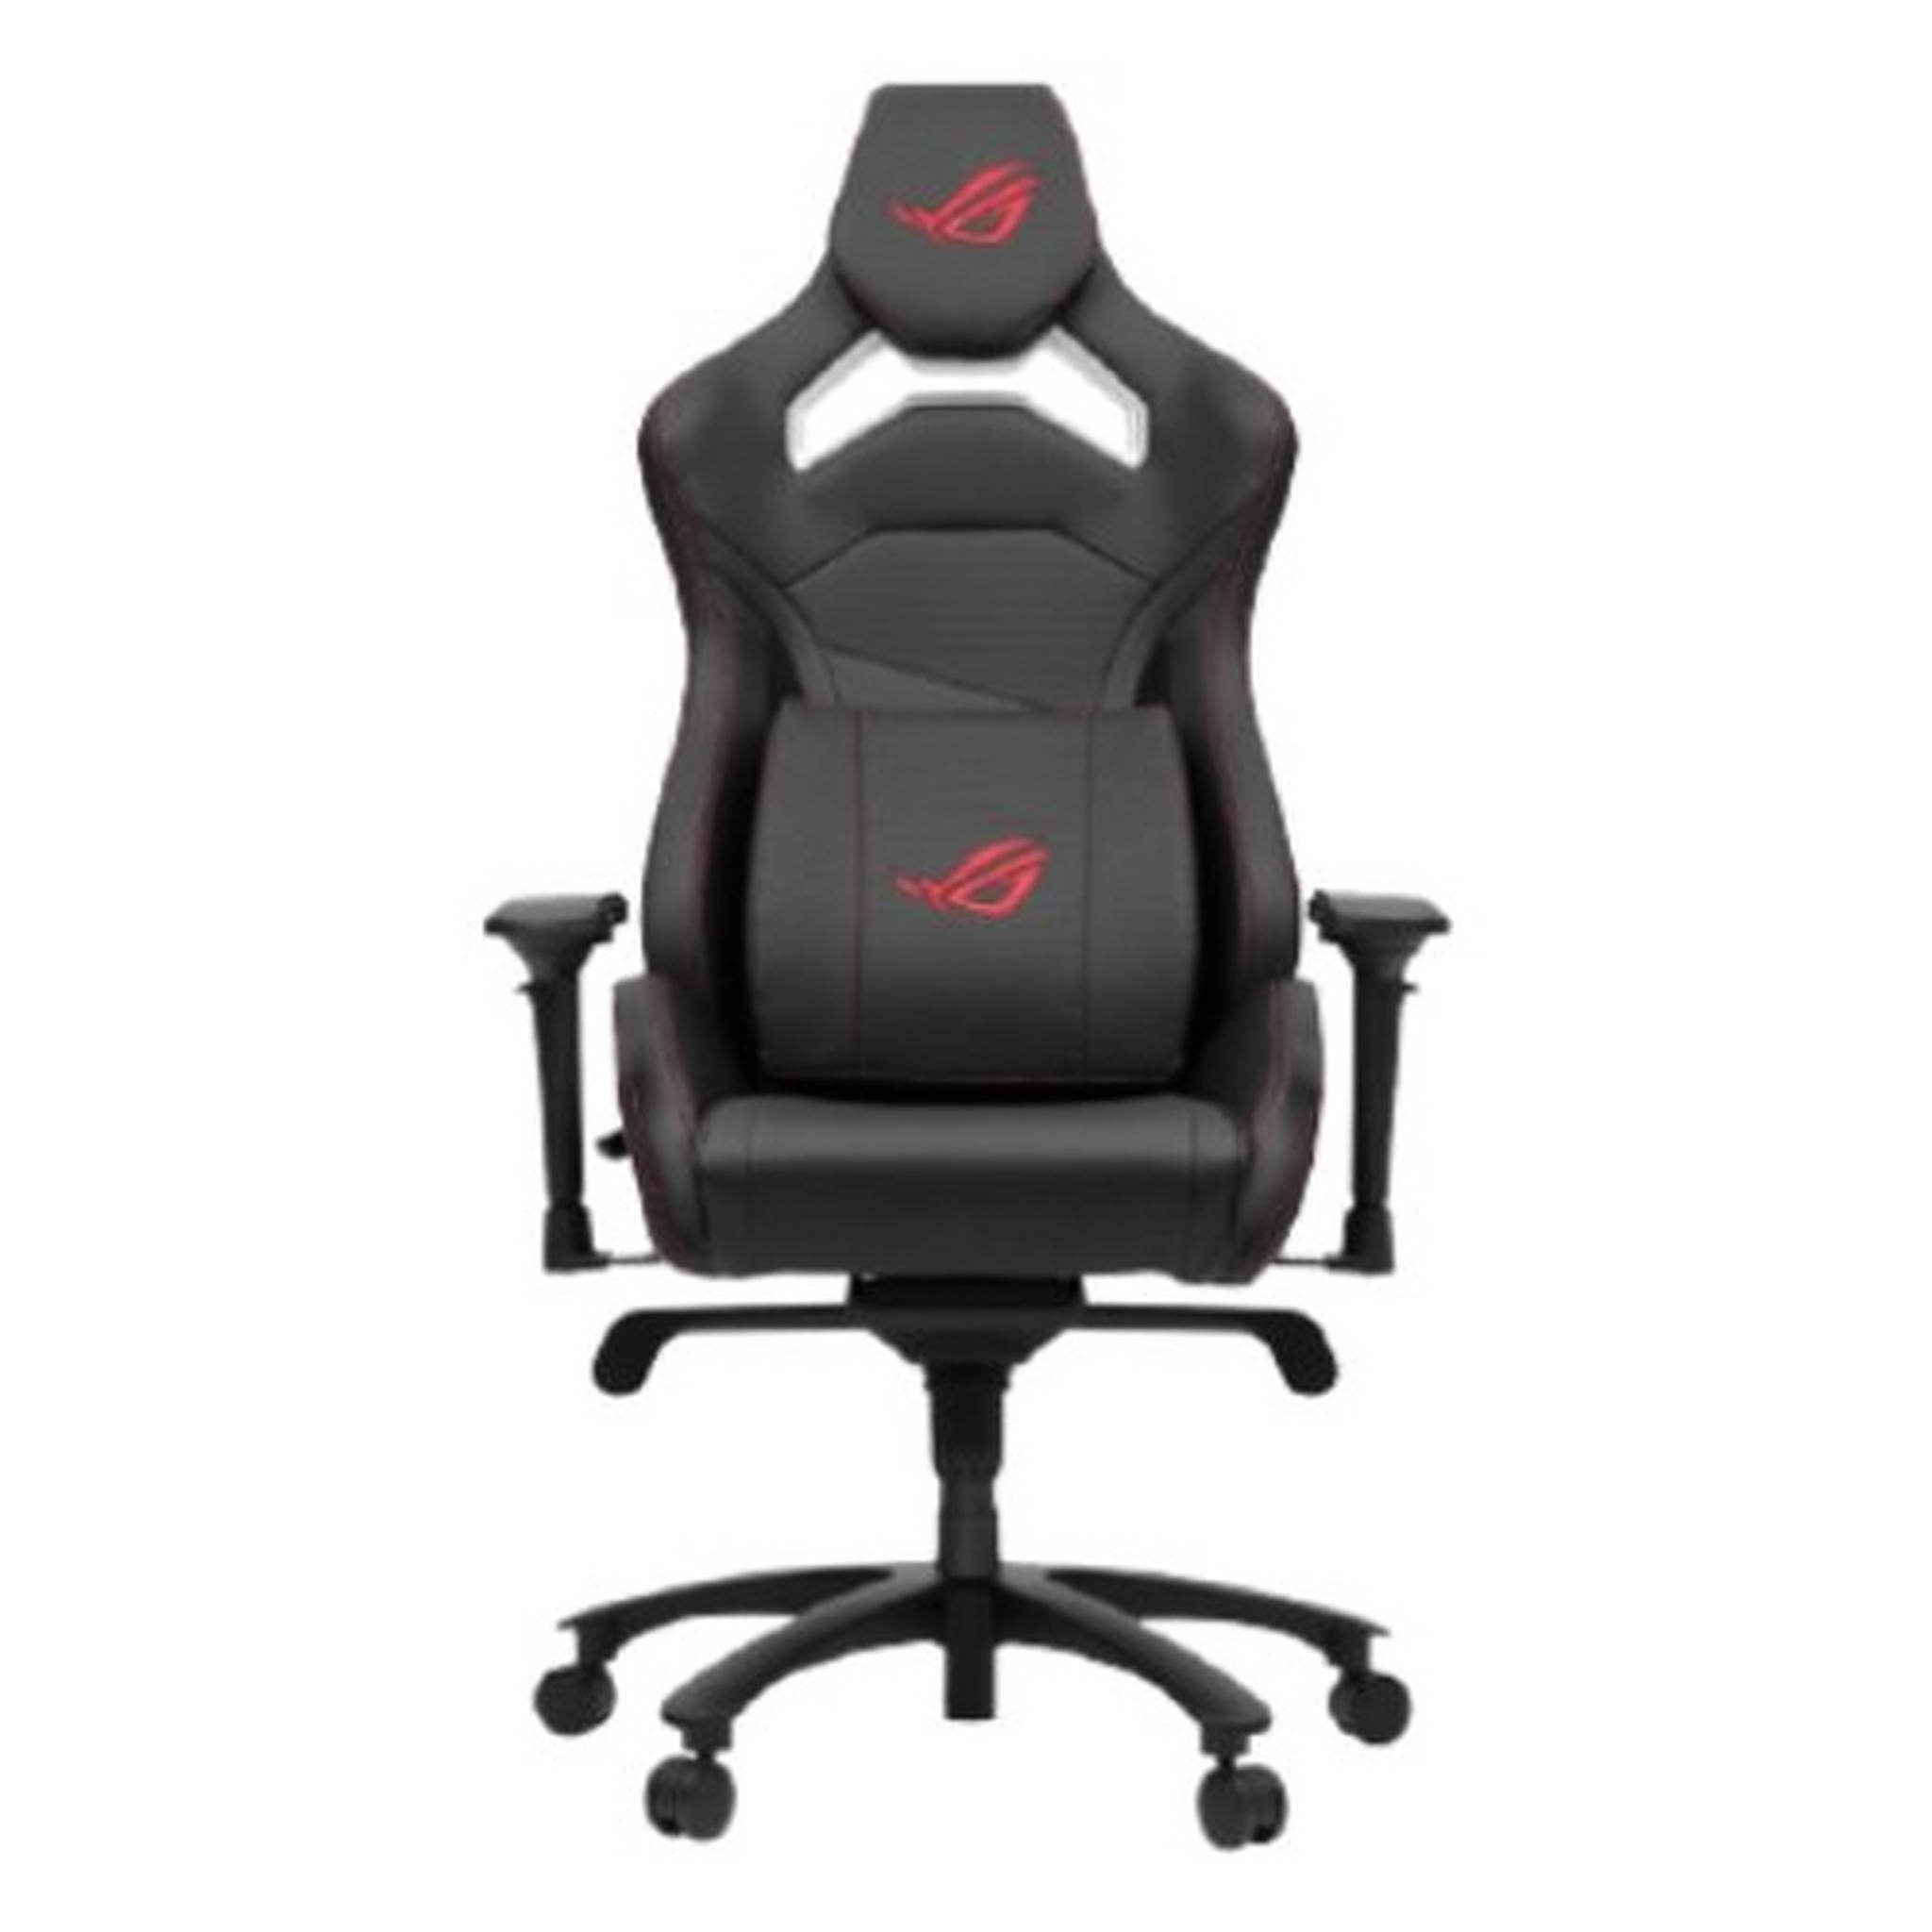 Asus ROG Chariot Core Gaming Chair - Black